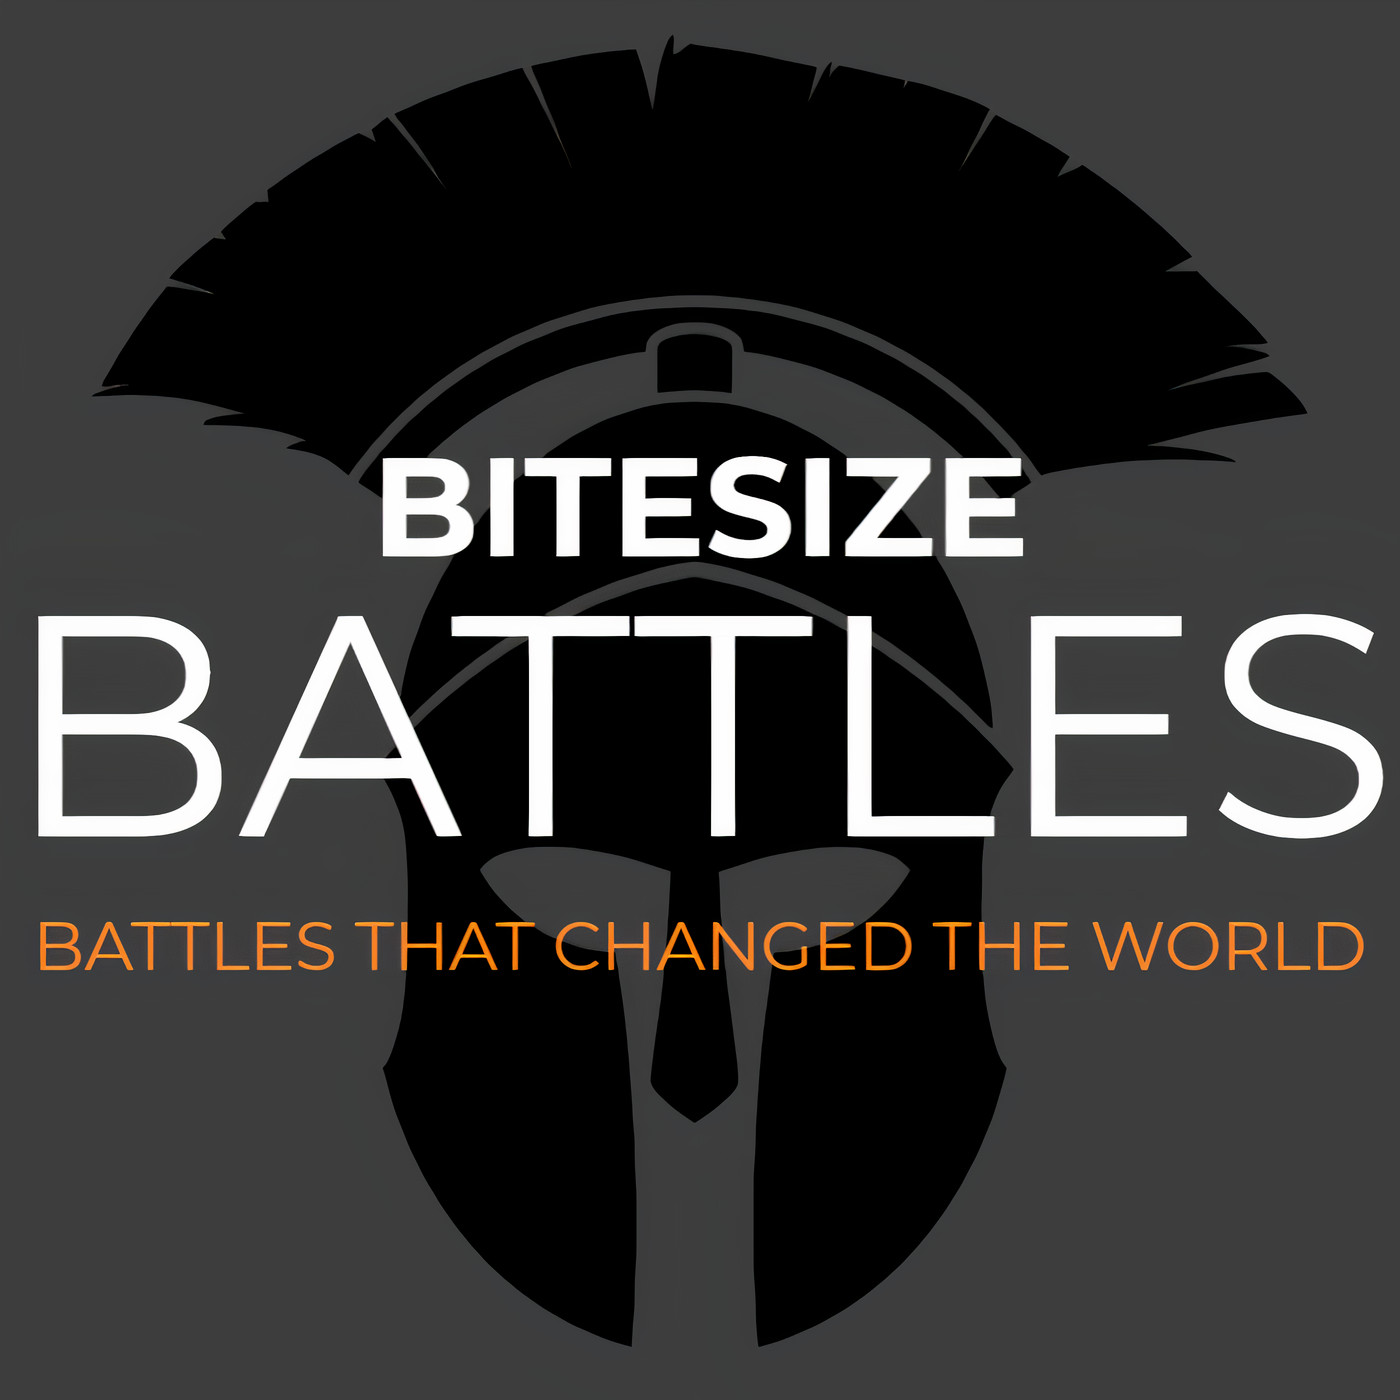 Bitesize Battles